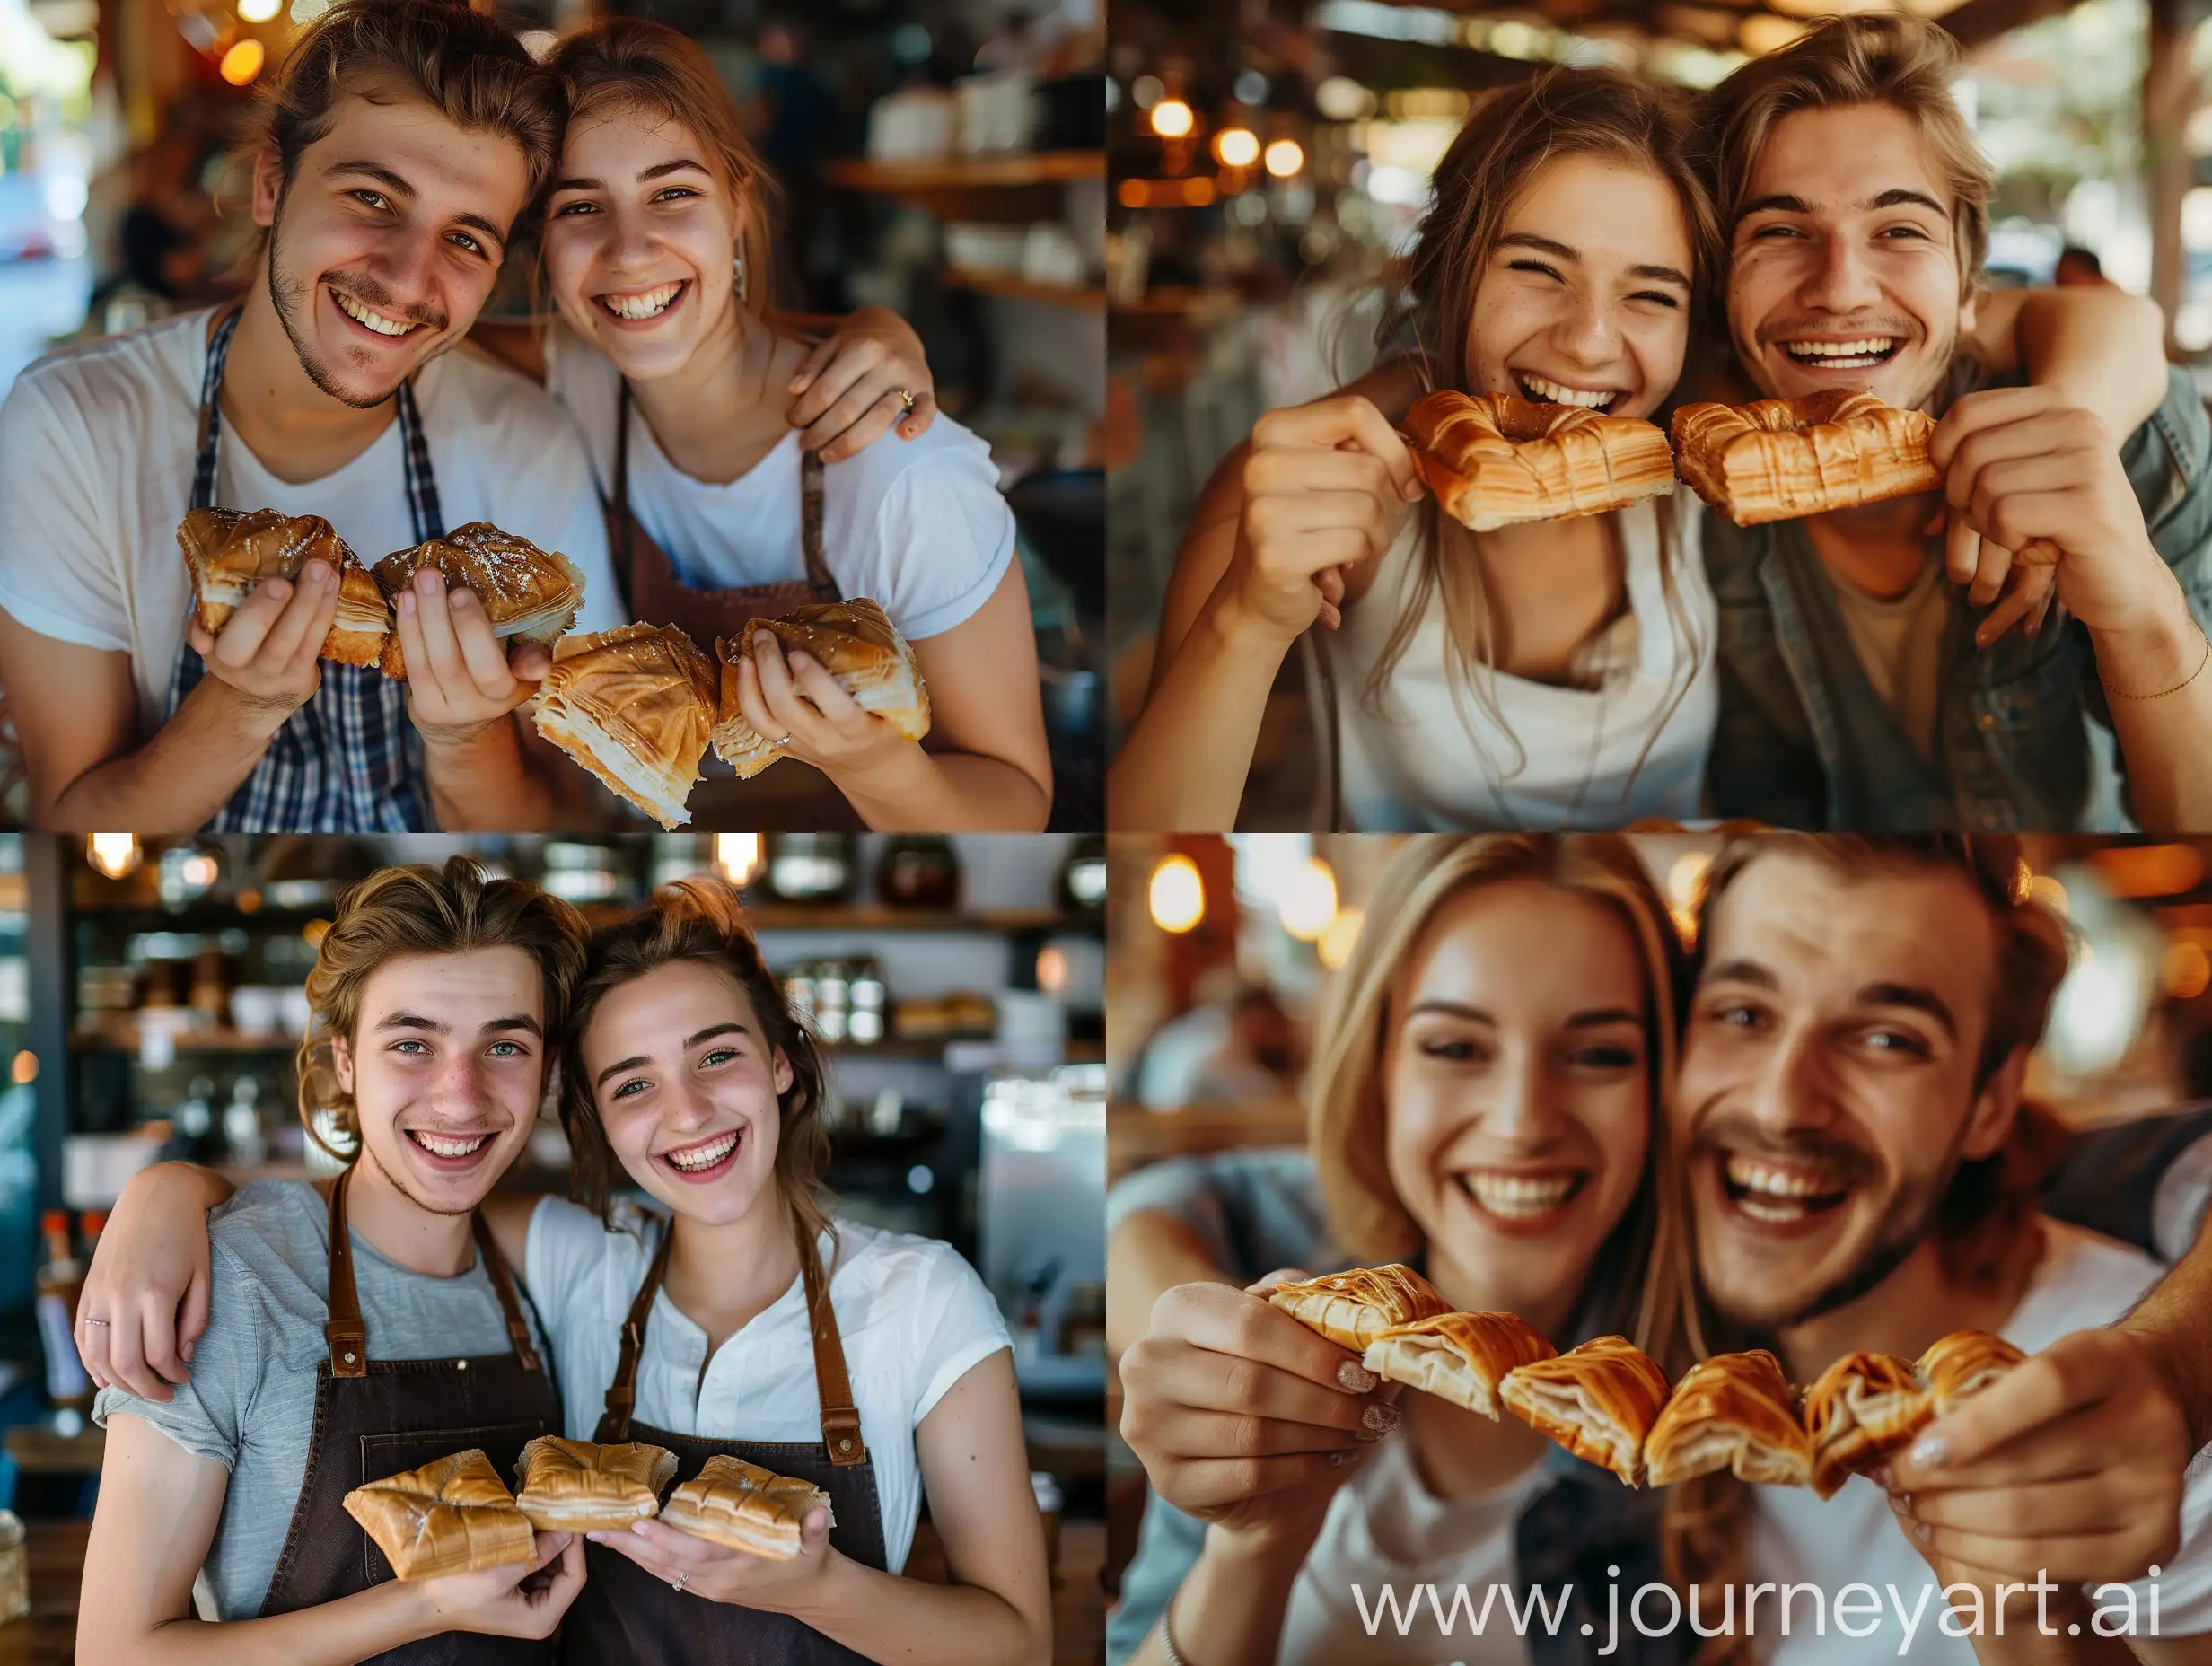 Youthful-White-Woman-and-Partner-Enjoying-Baklava-Toast-at-a-Restaurant